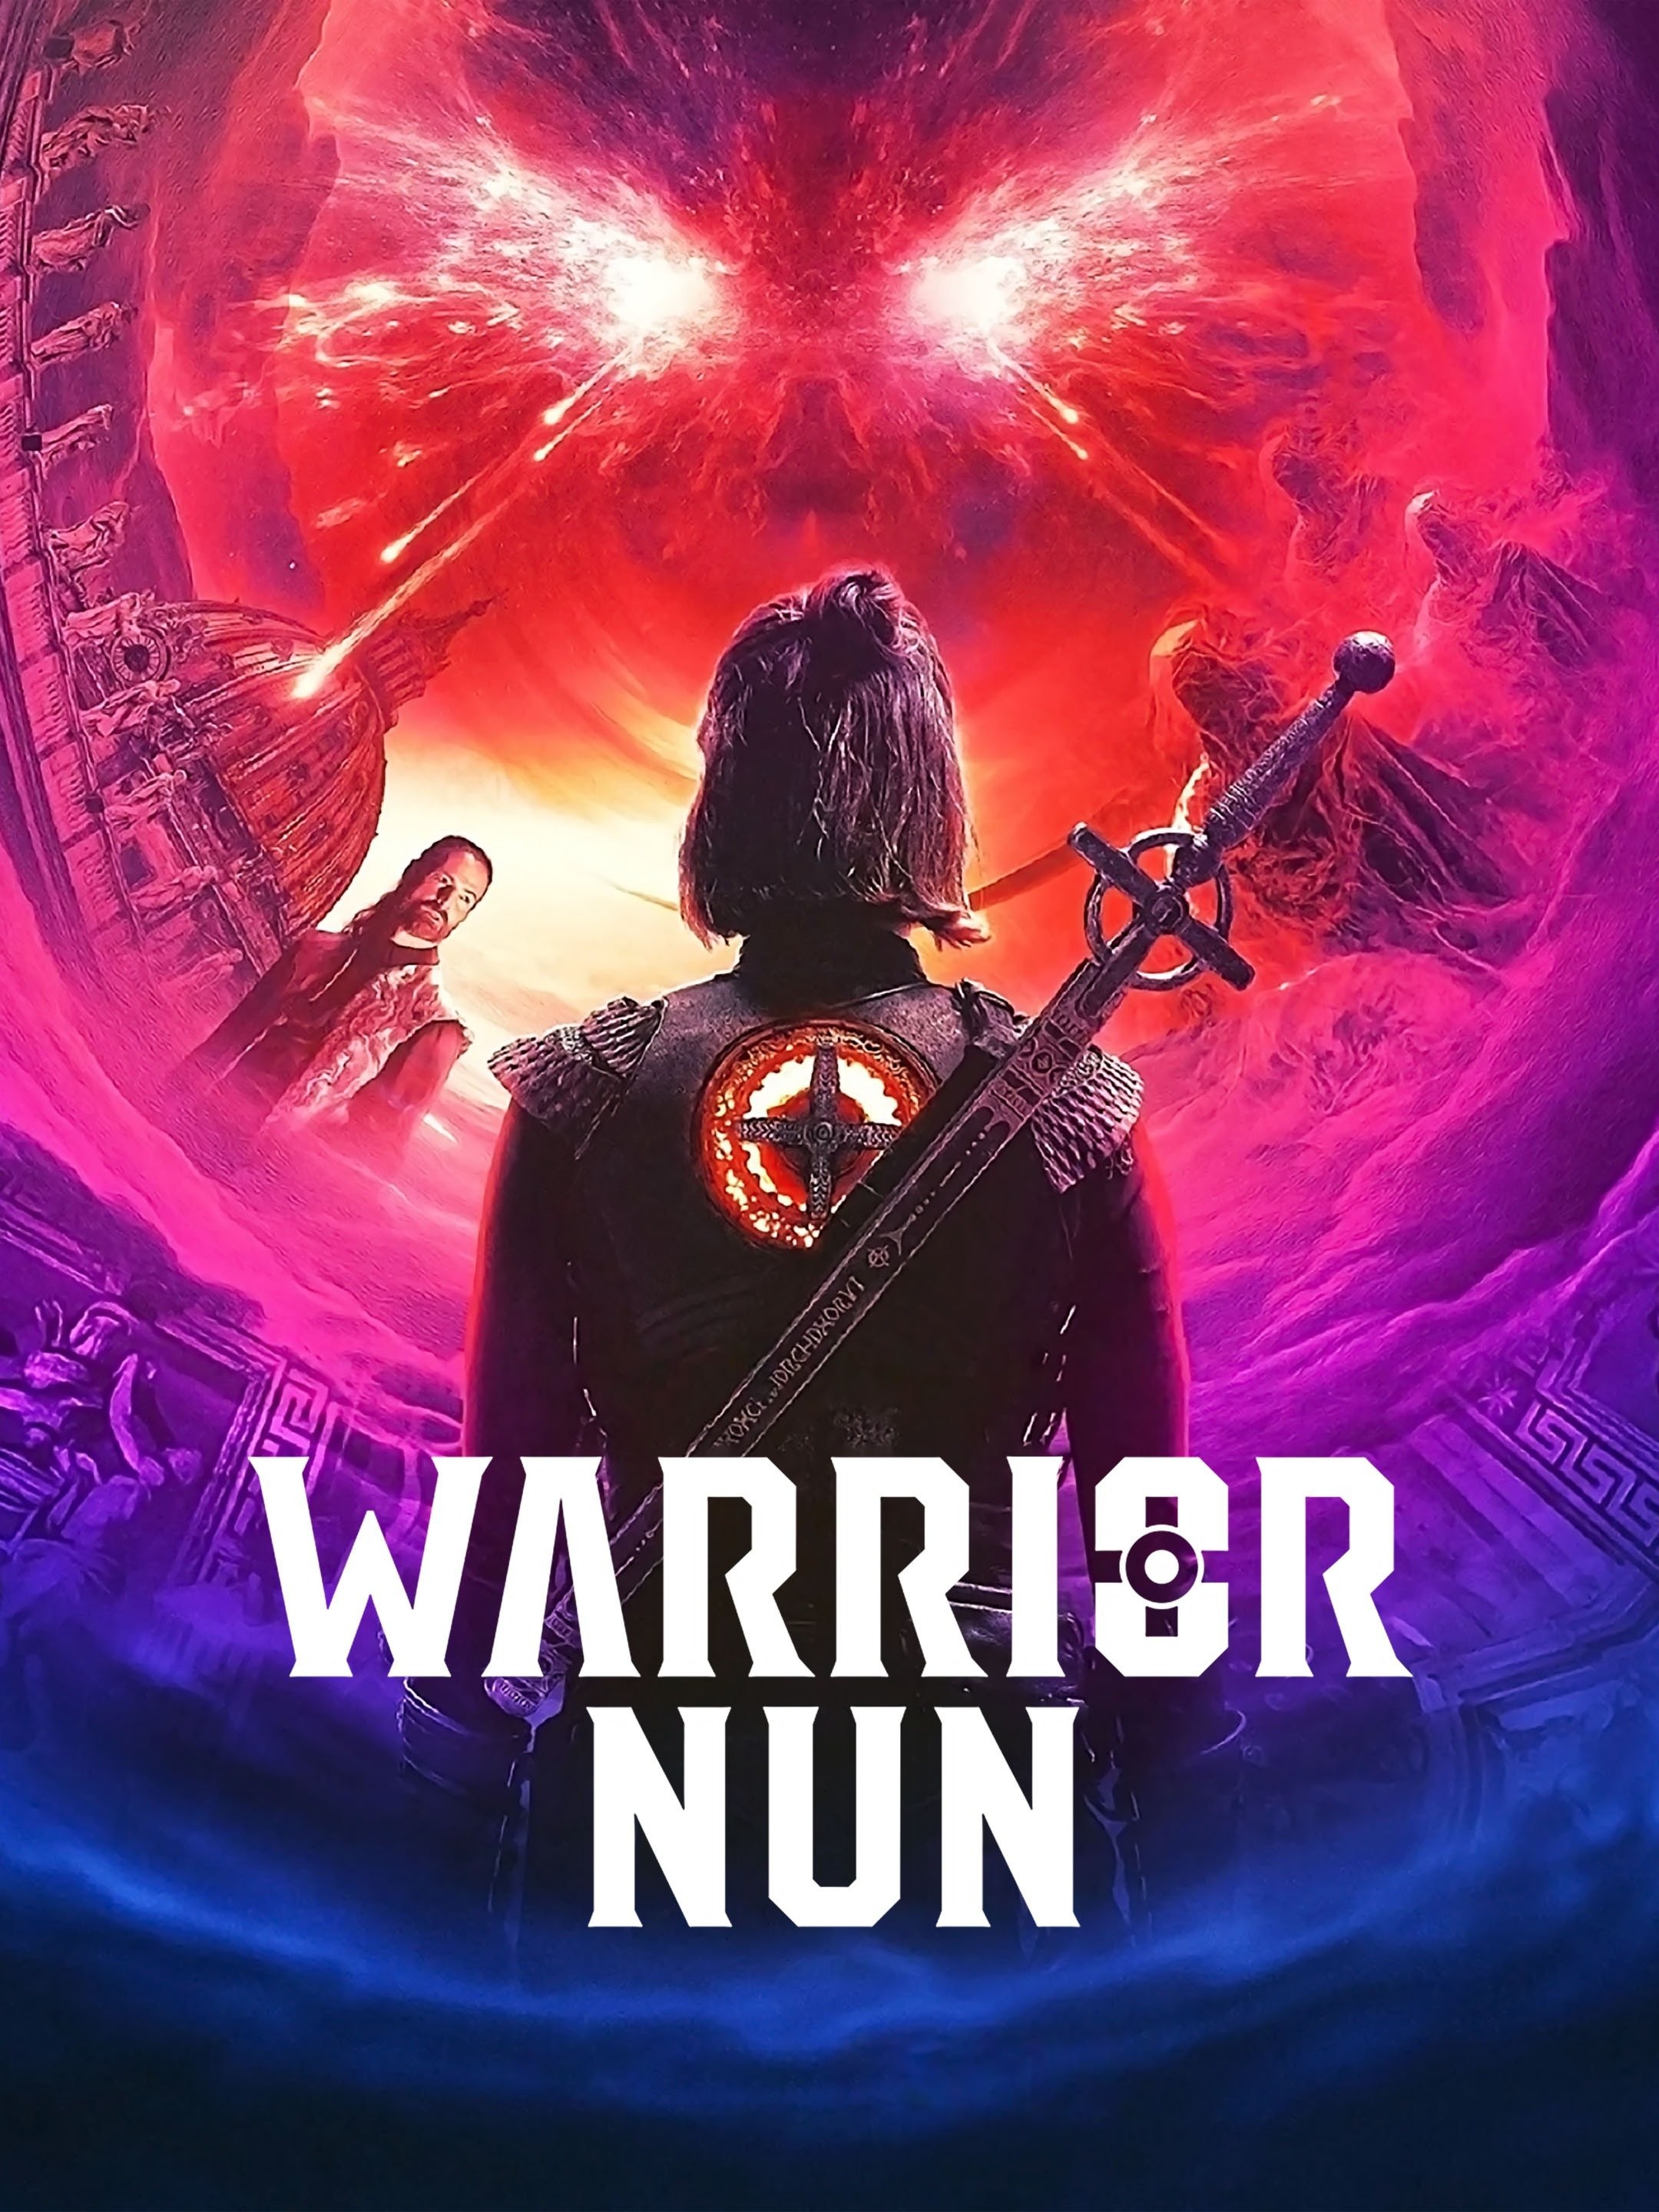 Warrior: Season 1, Episode 4 - Rotten Tomatoes